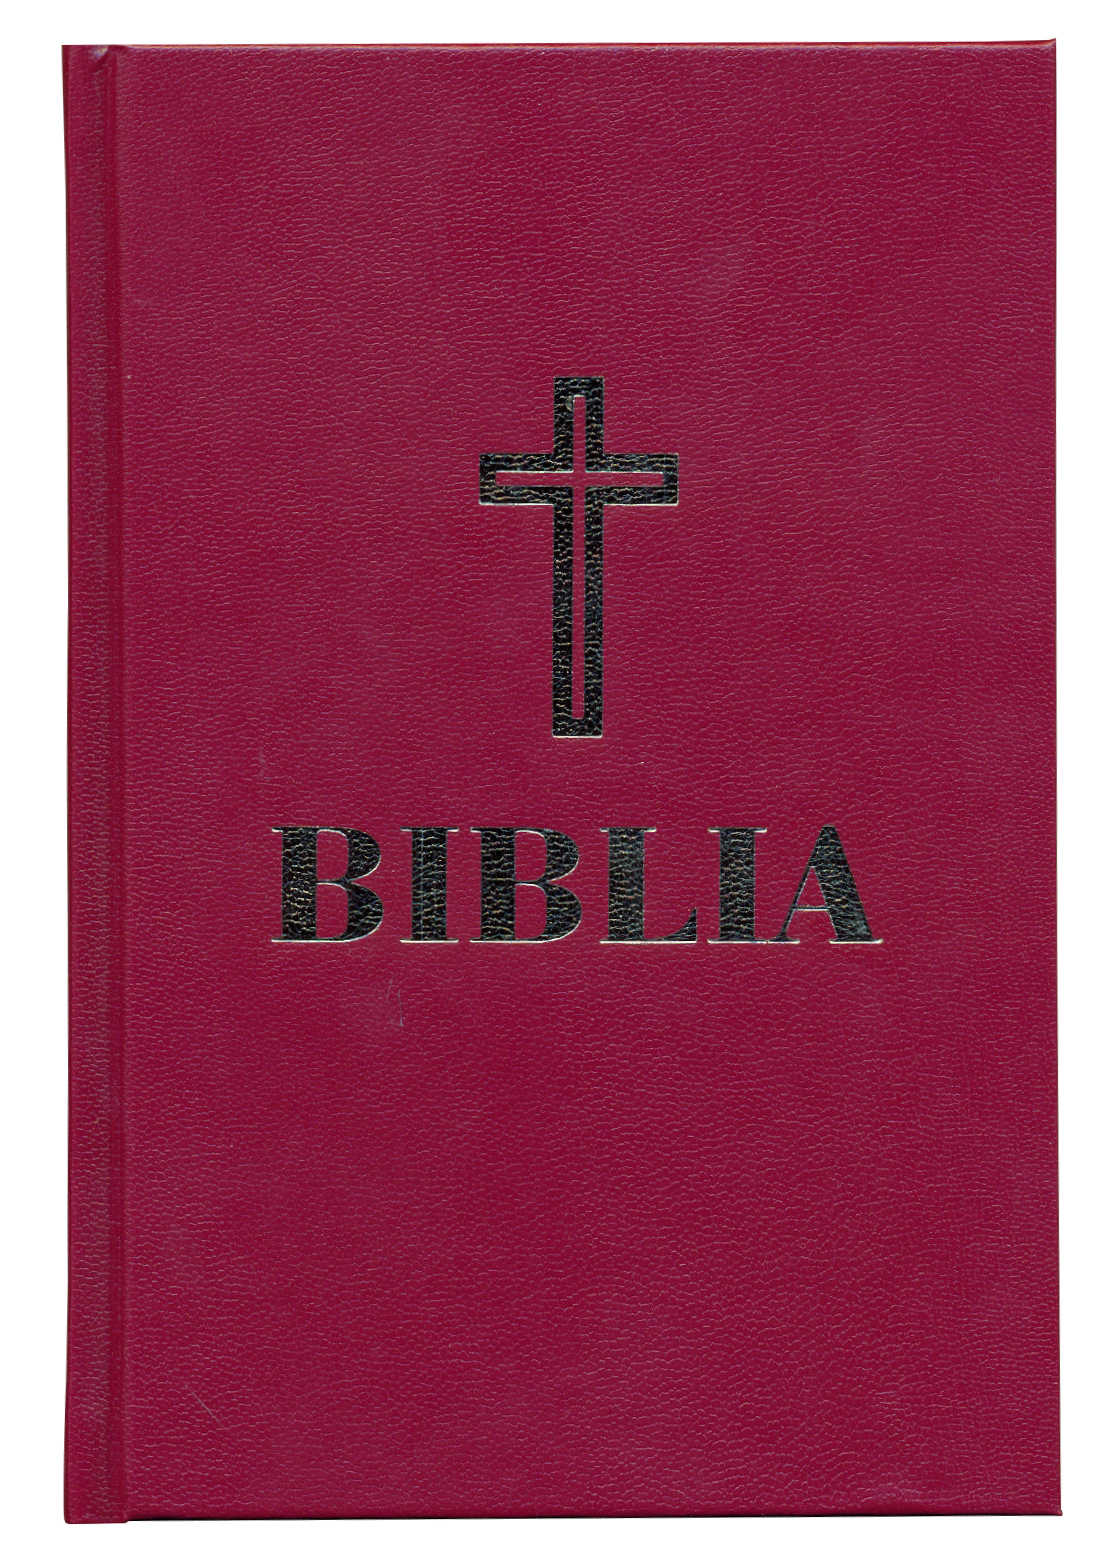 skip know Counterfeit Biblia